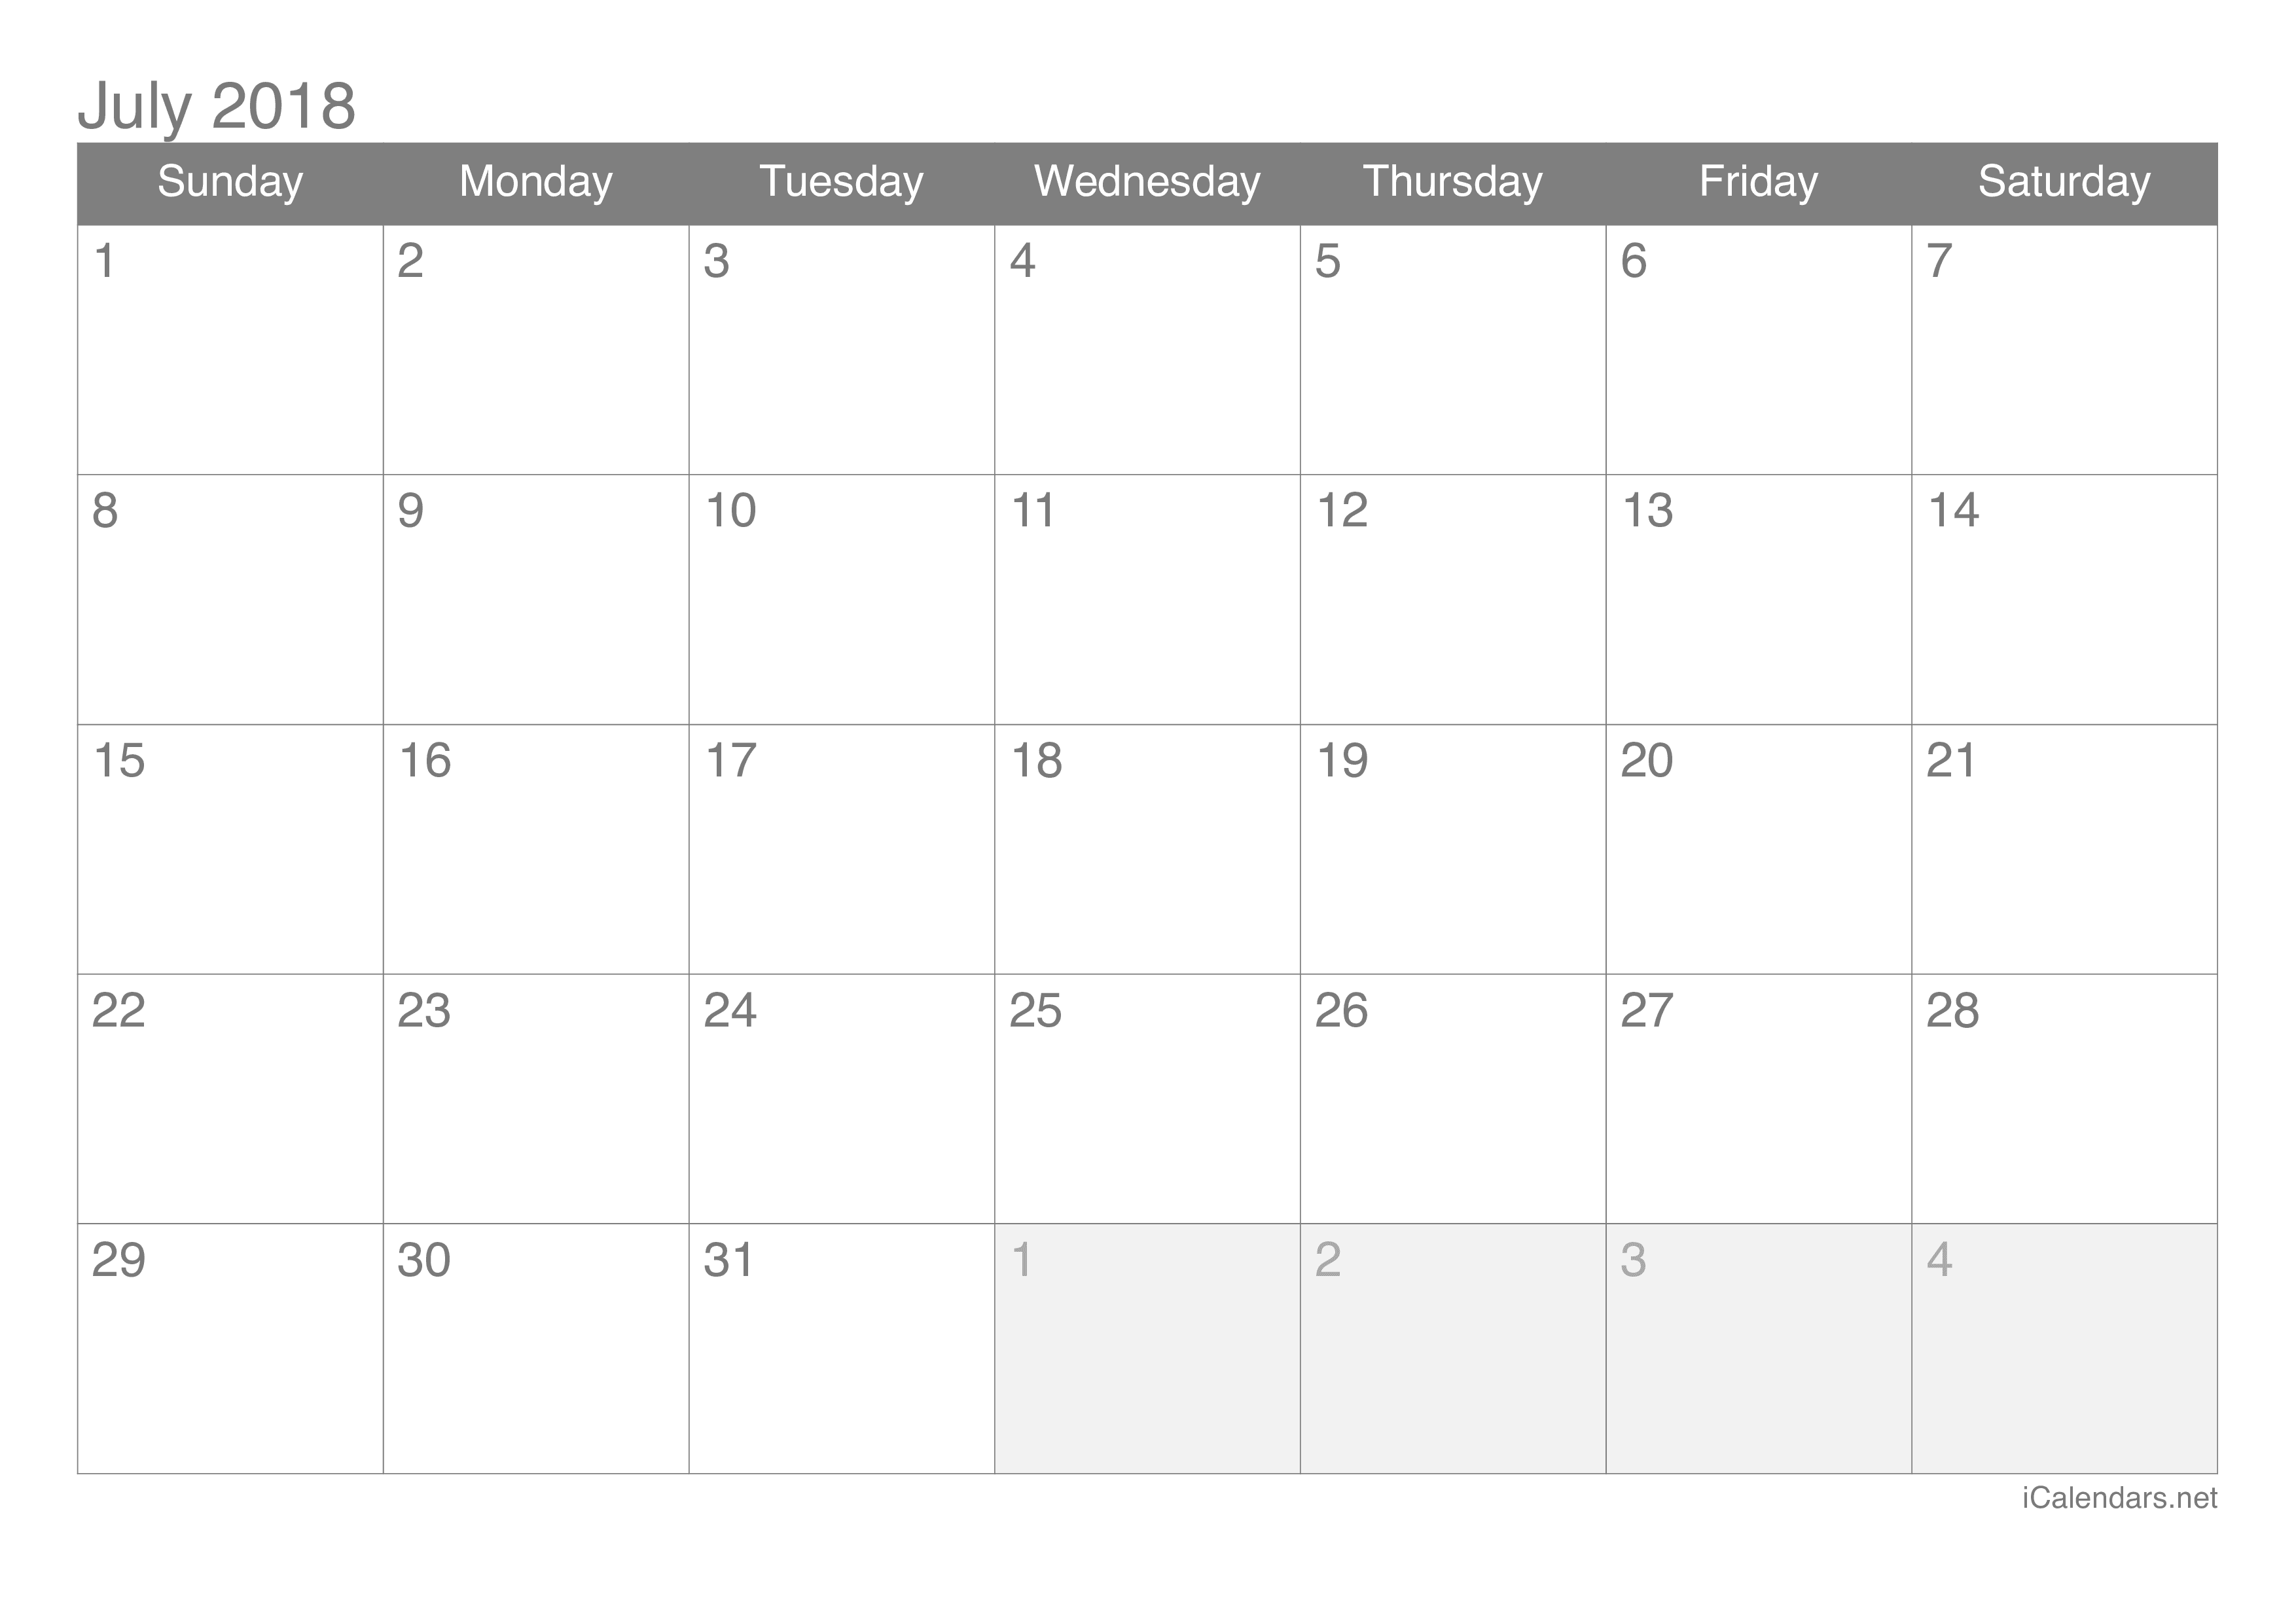 July 2018 Printable Calendar icalendars net